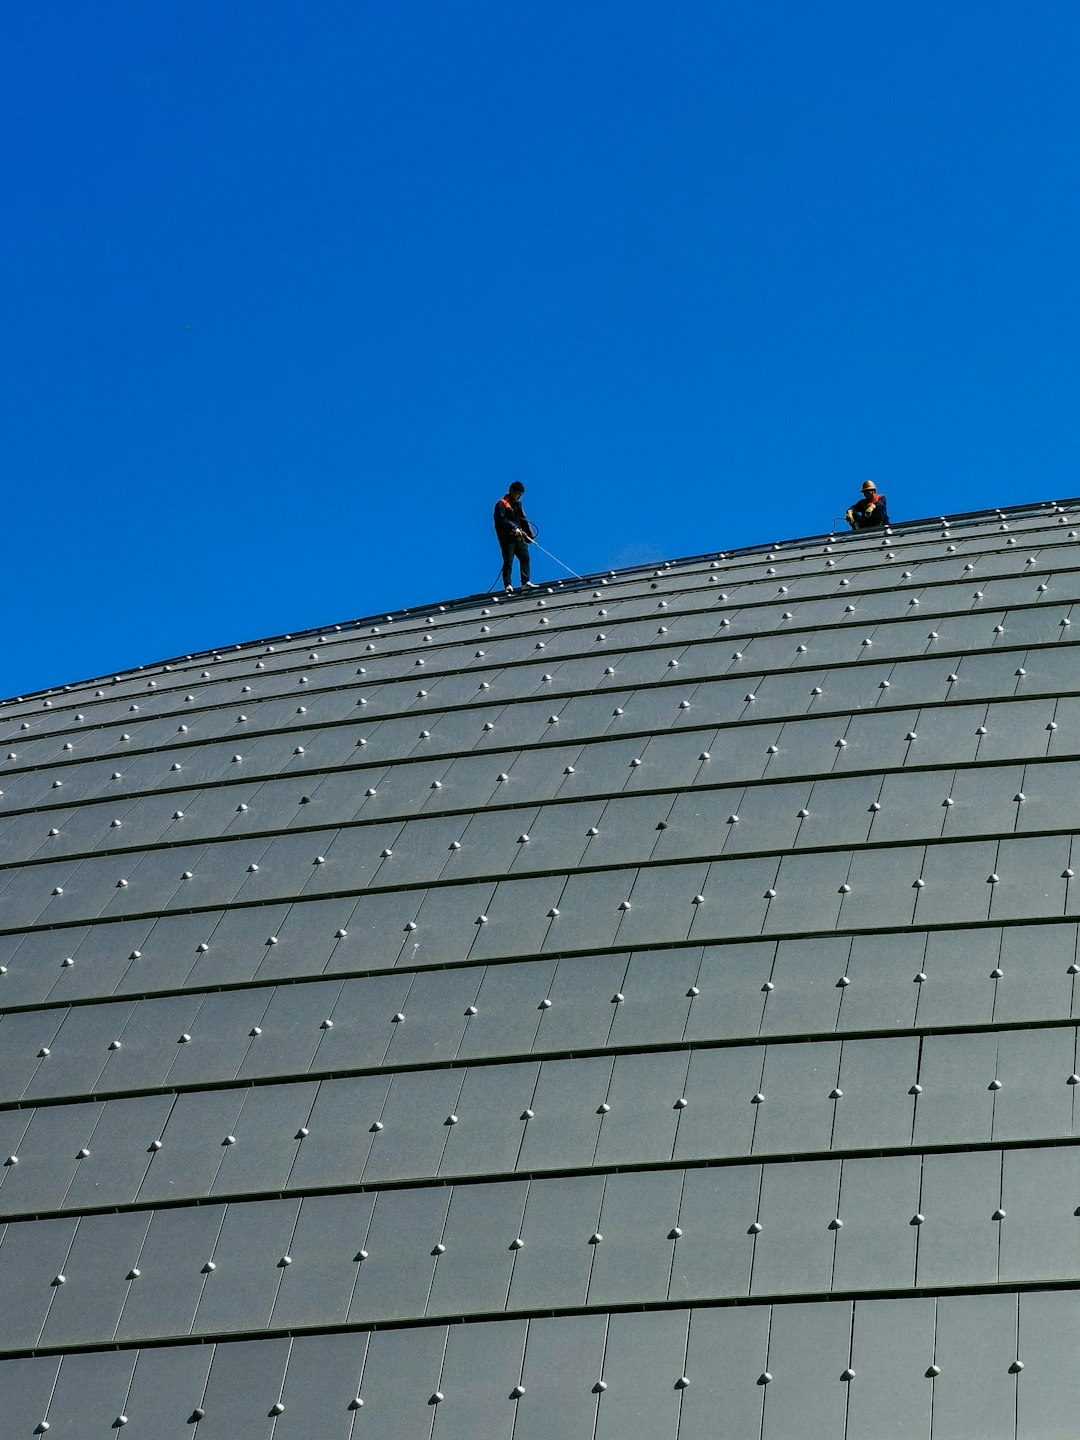 3 men on top of building under blue sky during daytime